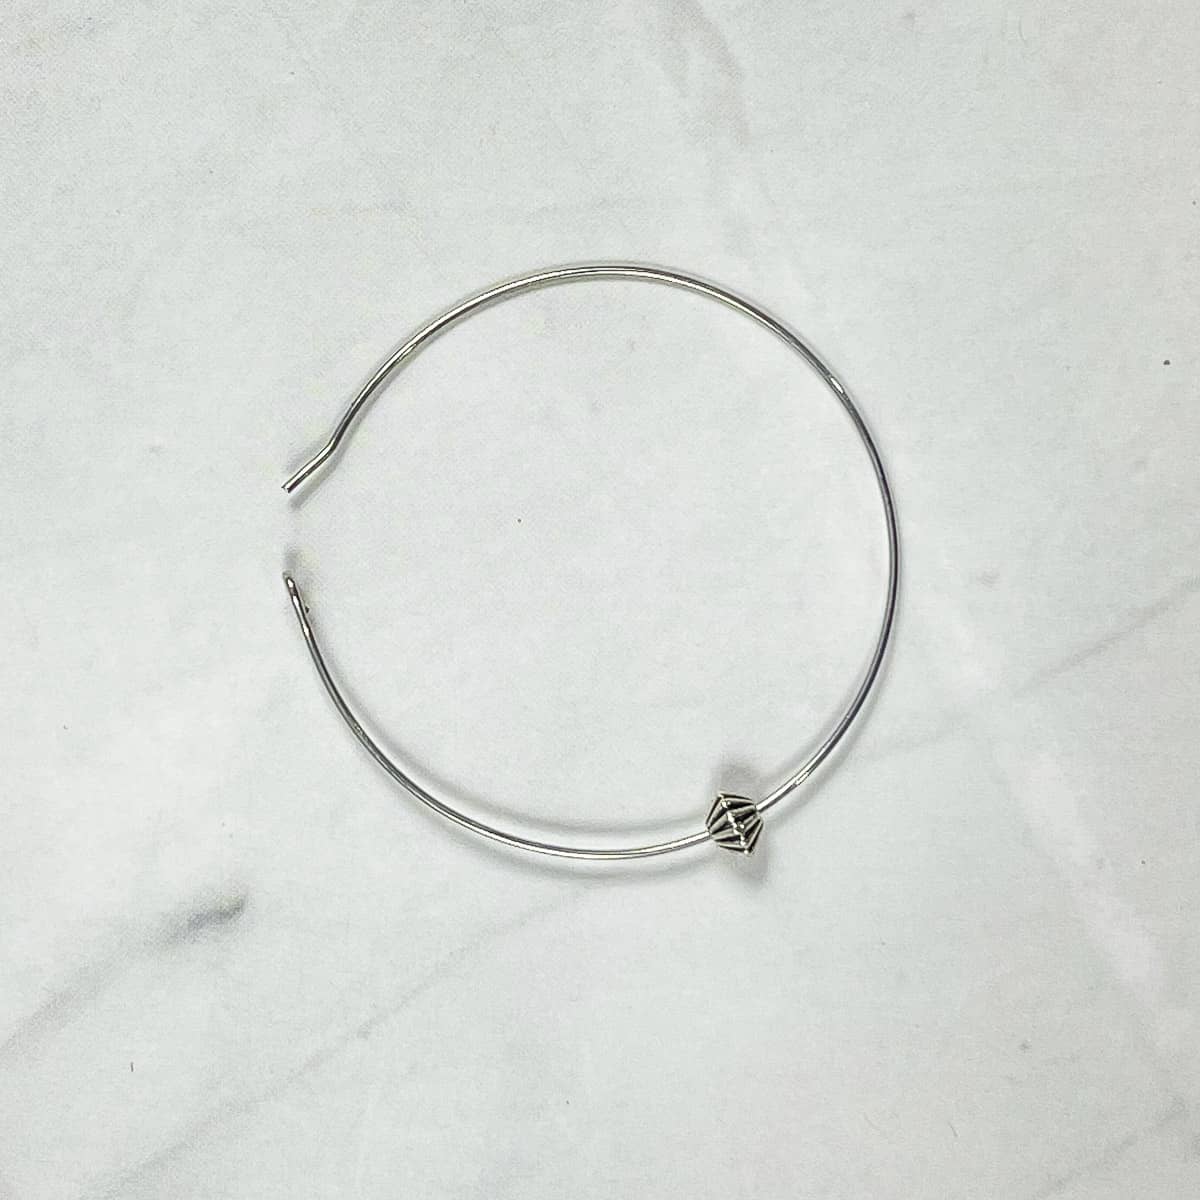 A silver bead in a hoop.